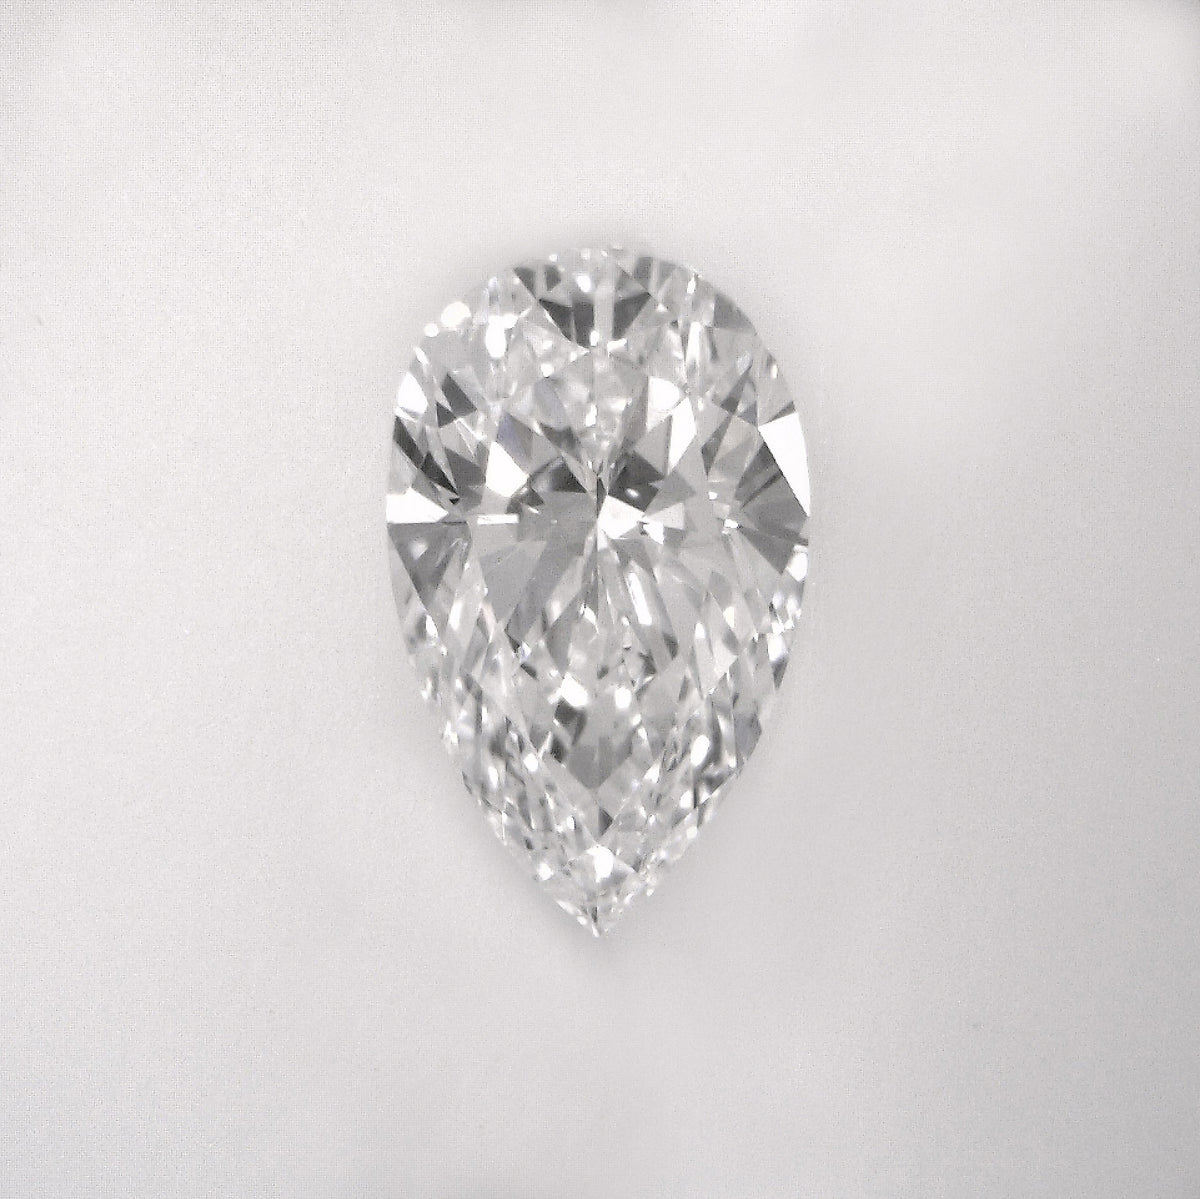 GIA Certified 1.32 Ct Pear cut D VS2 Loose Diamond